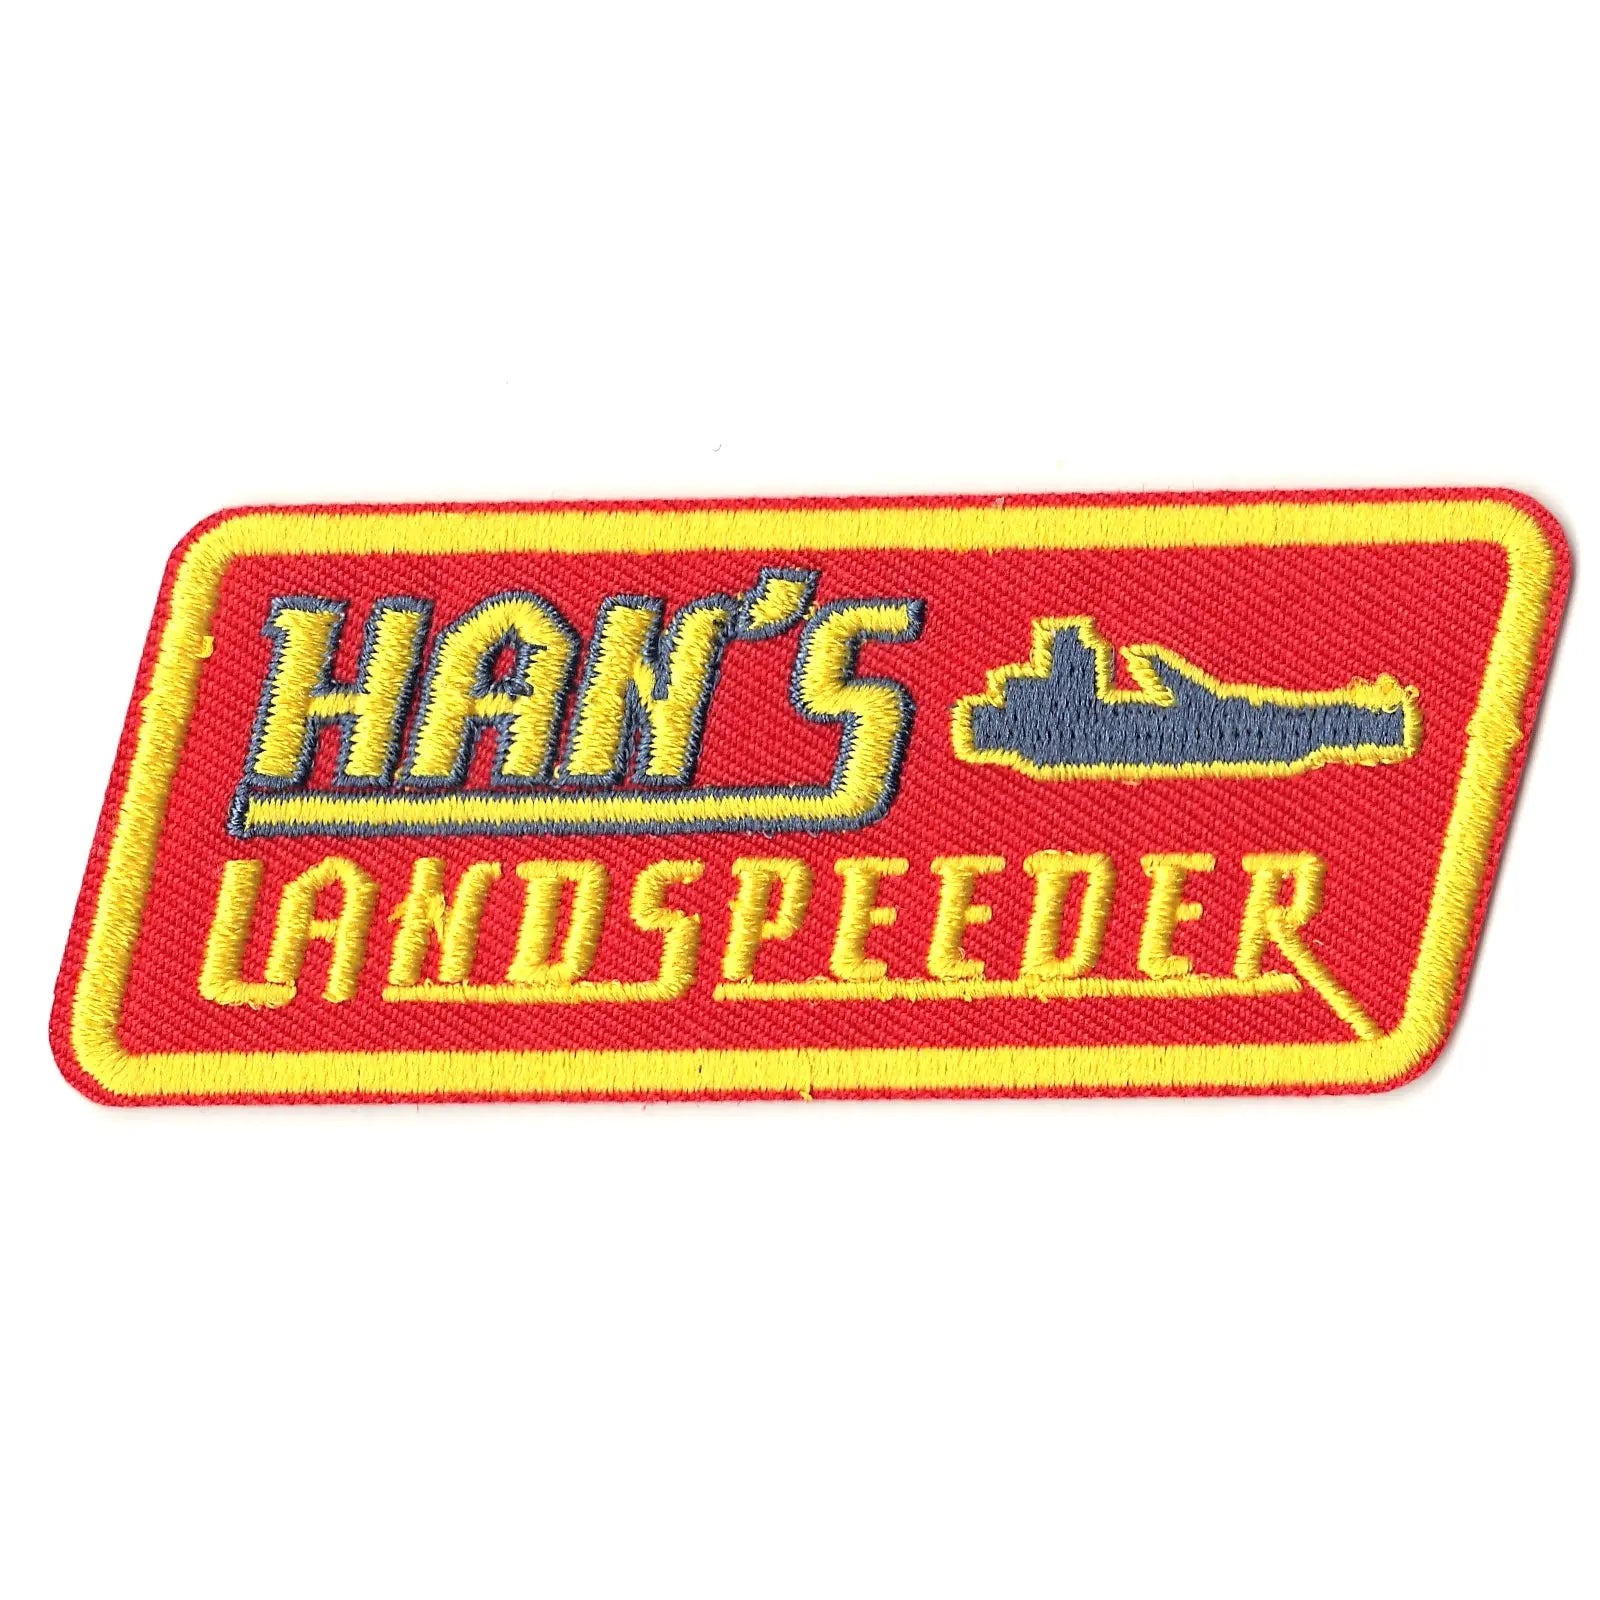 Han's Landspeeder Solo A Star Wars Story Box Logo Iron on Patch 